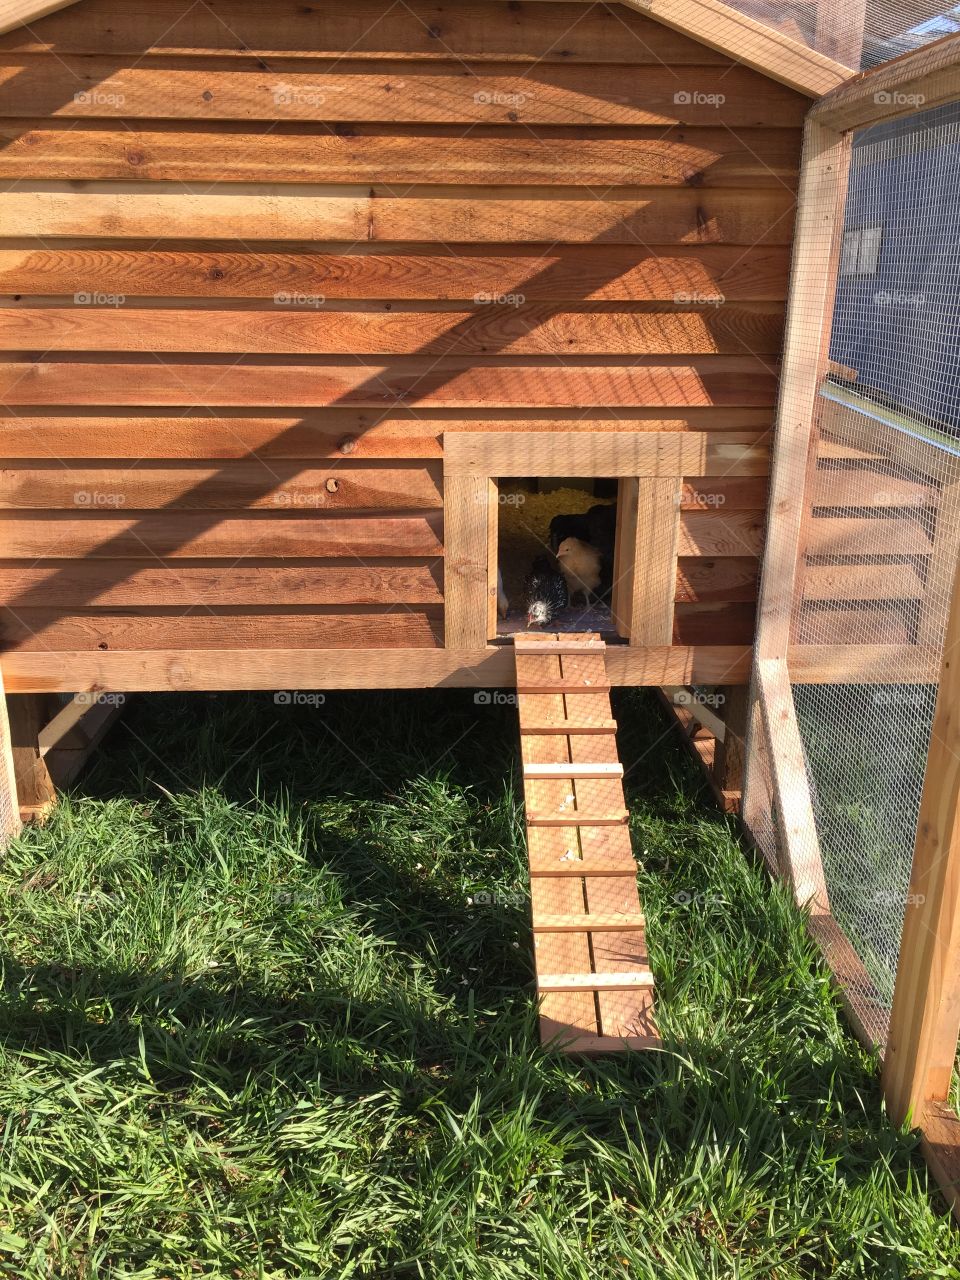 New chicken house 